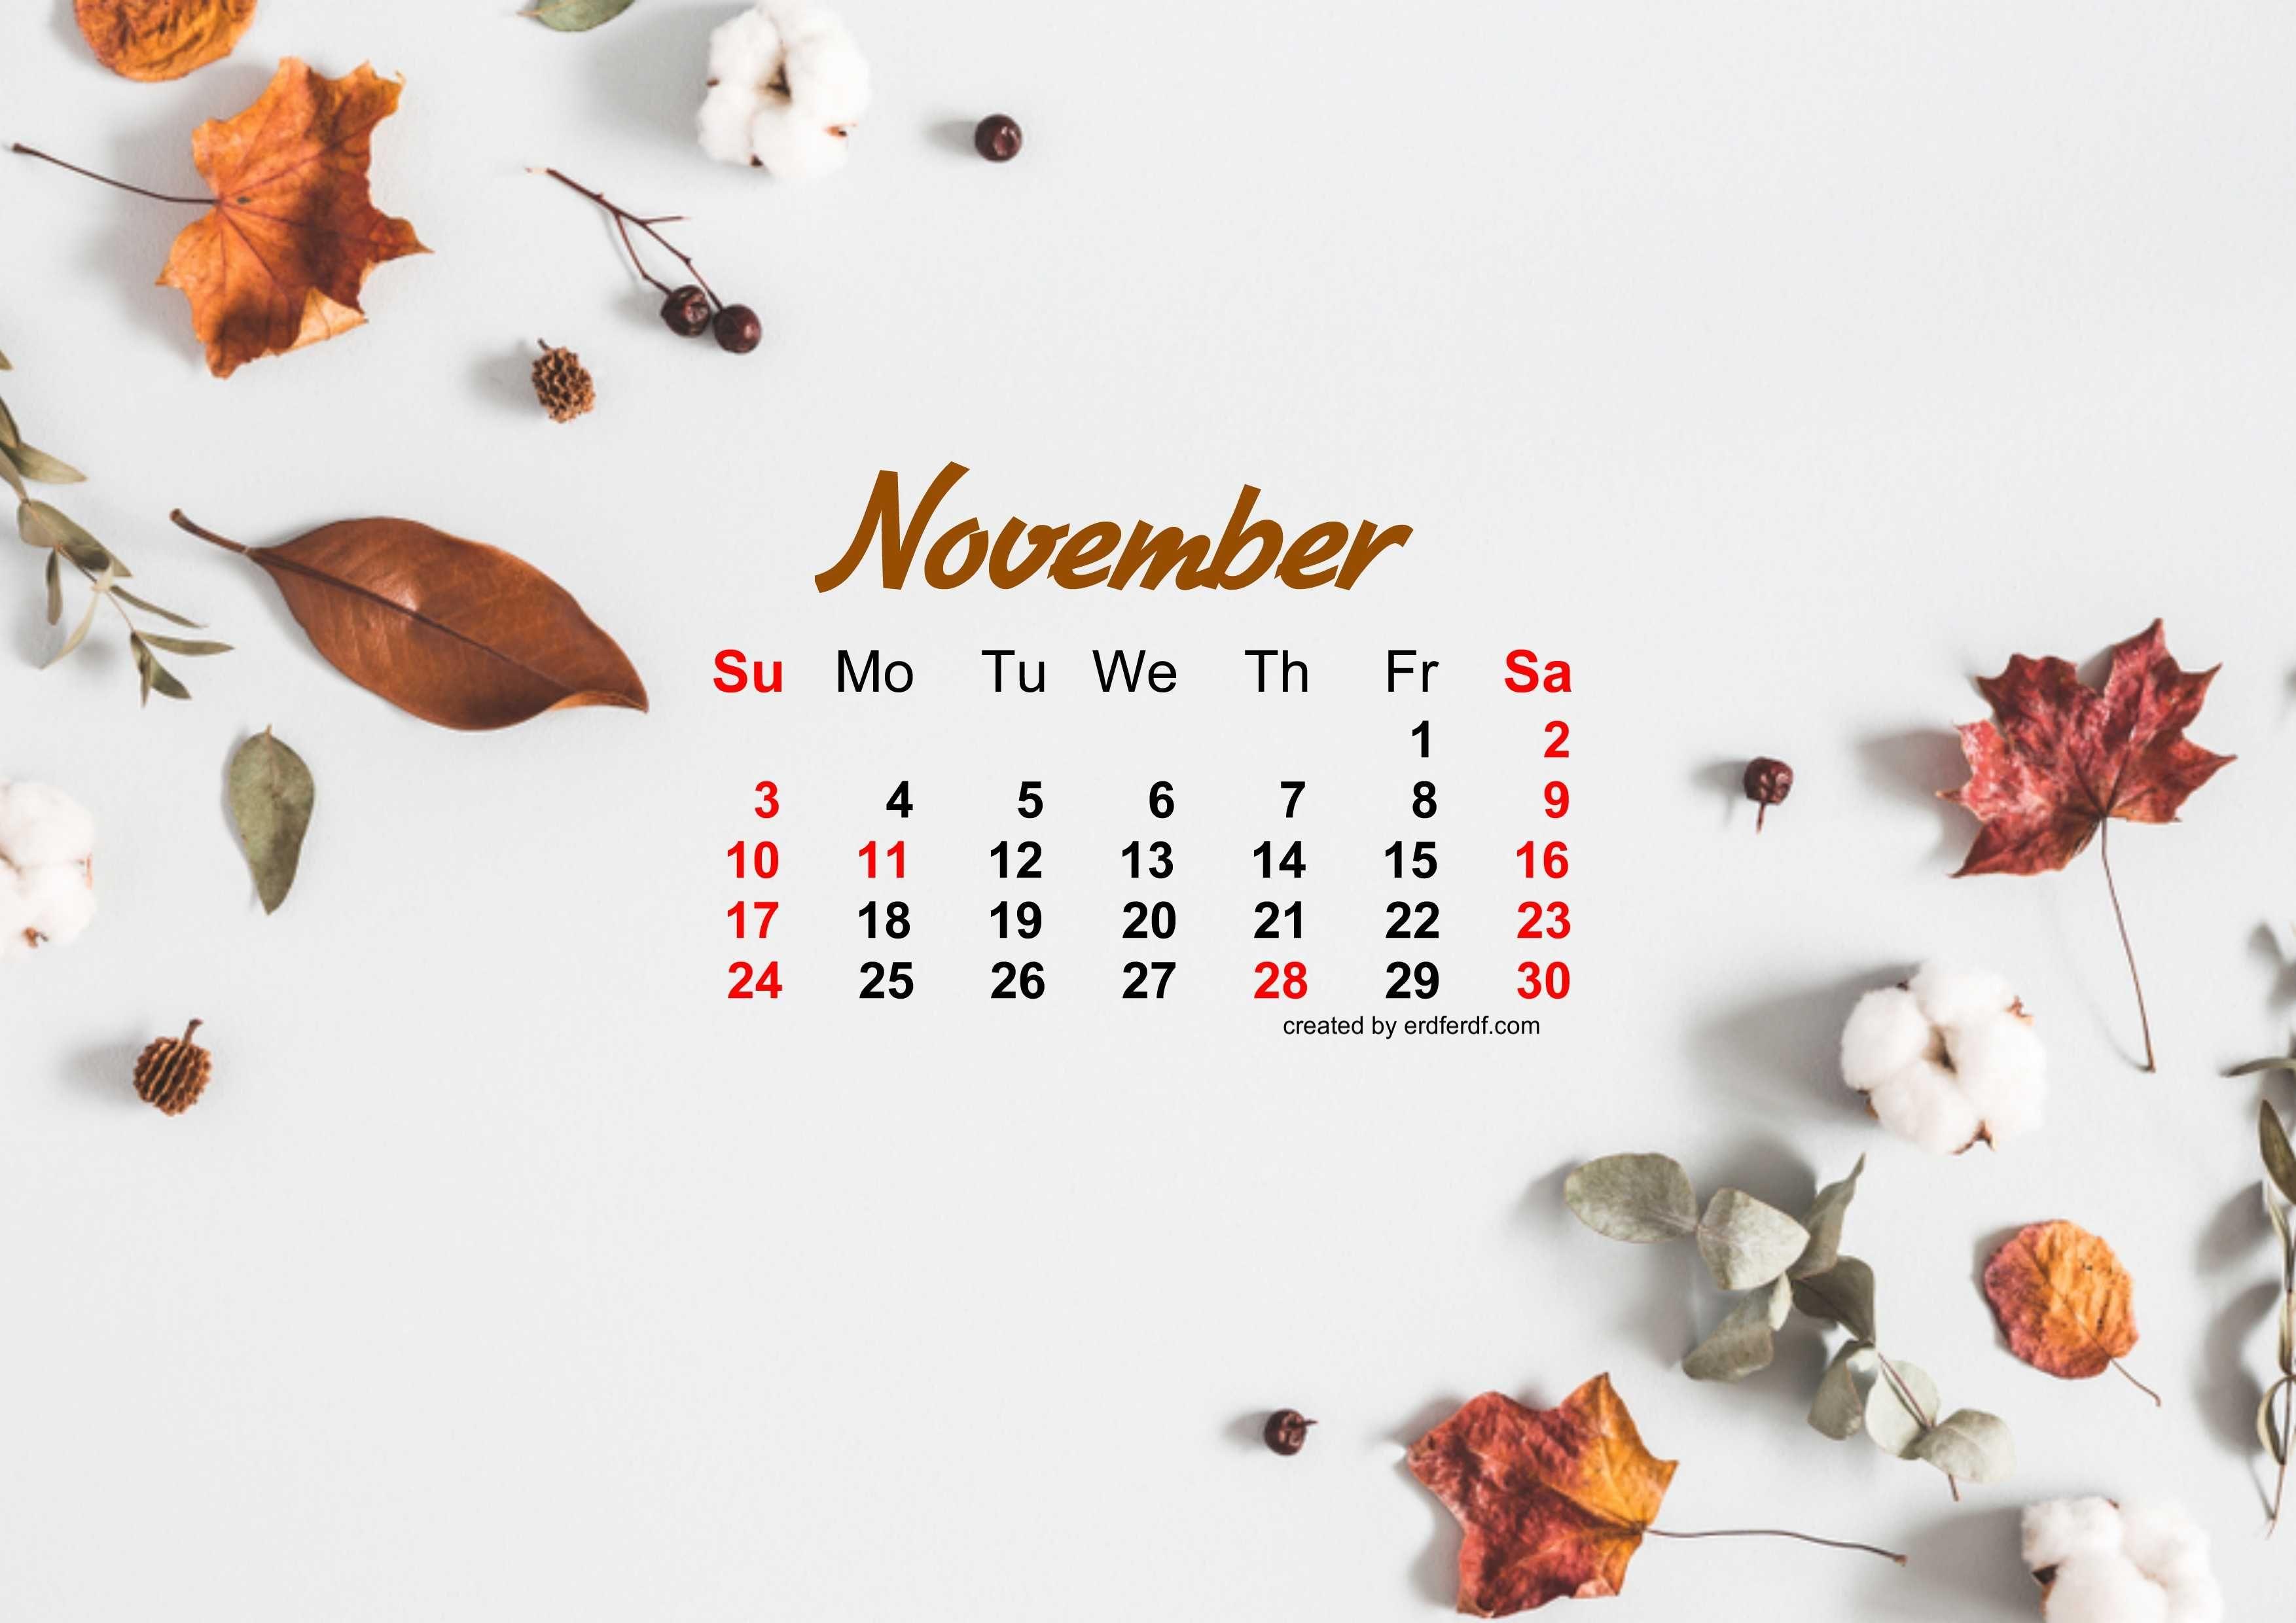 November 2019 Calendar Wallpapers - Wallpaper Cave